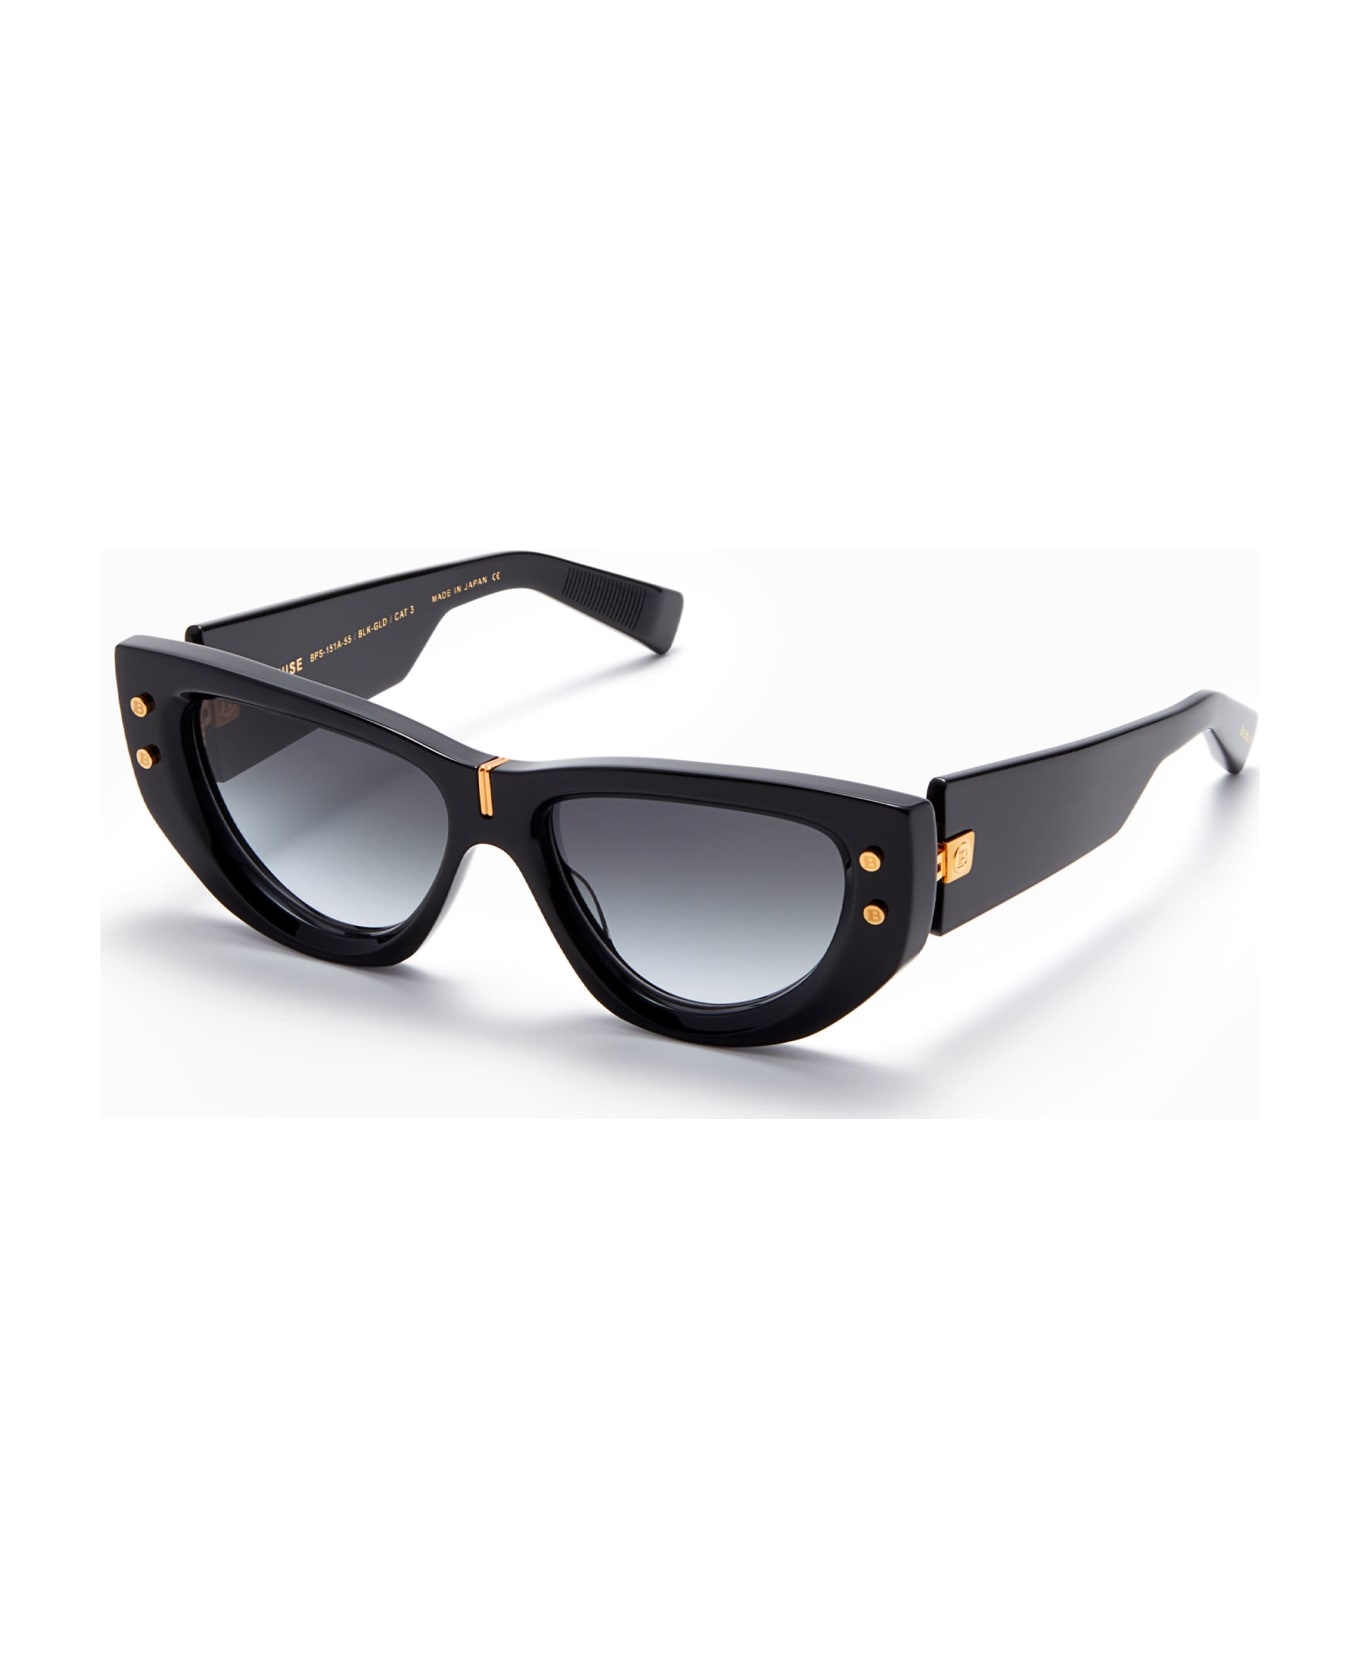 Balmain B-muse - Black / Gold Sunglasses - Black